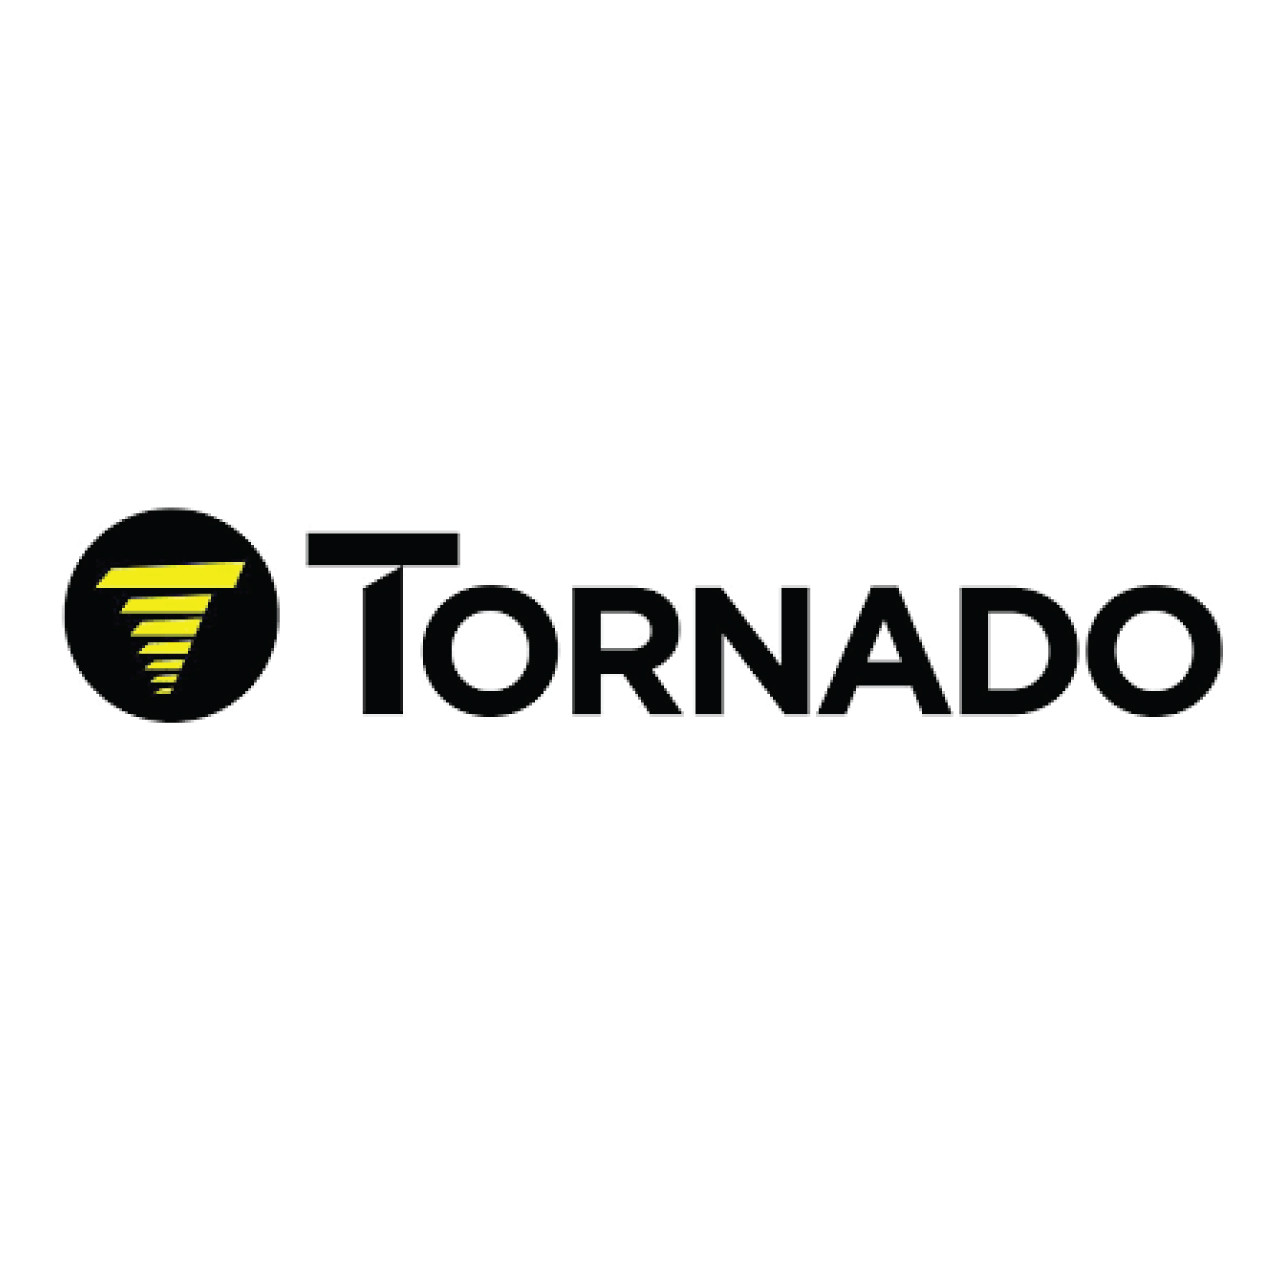 Tornado K57316110C - AFTERMARKET - VAC FILTERS, CASE OF 60 PCS PIC